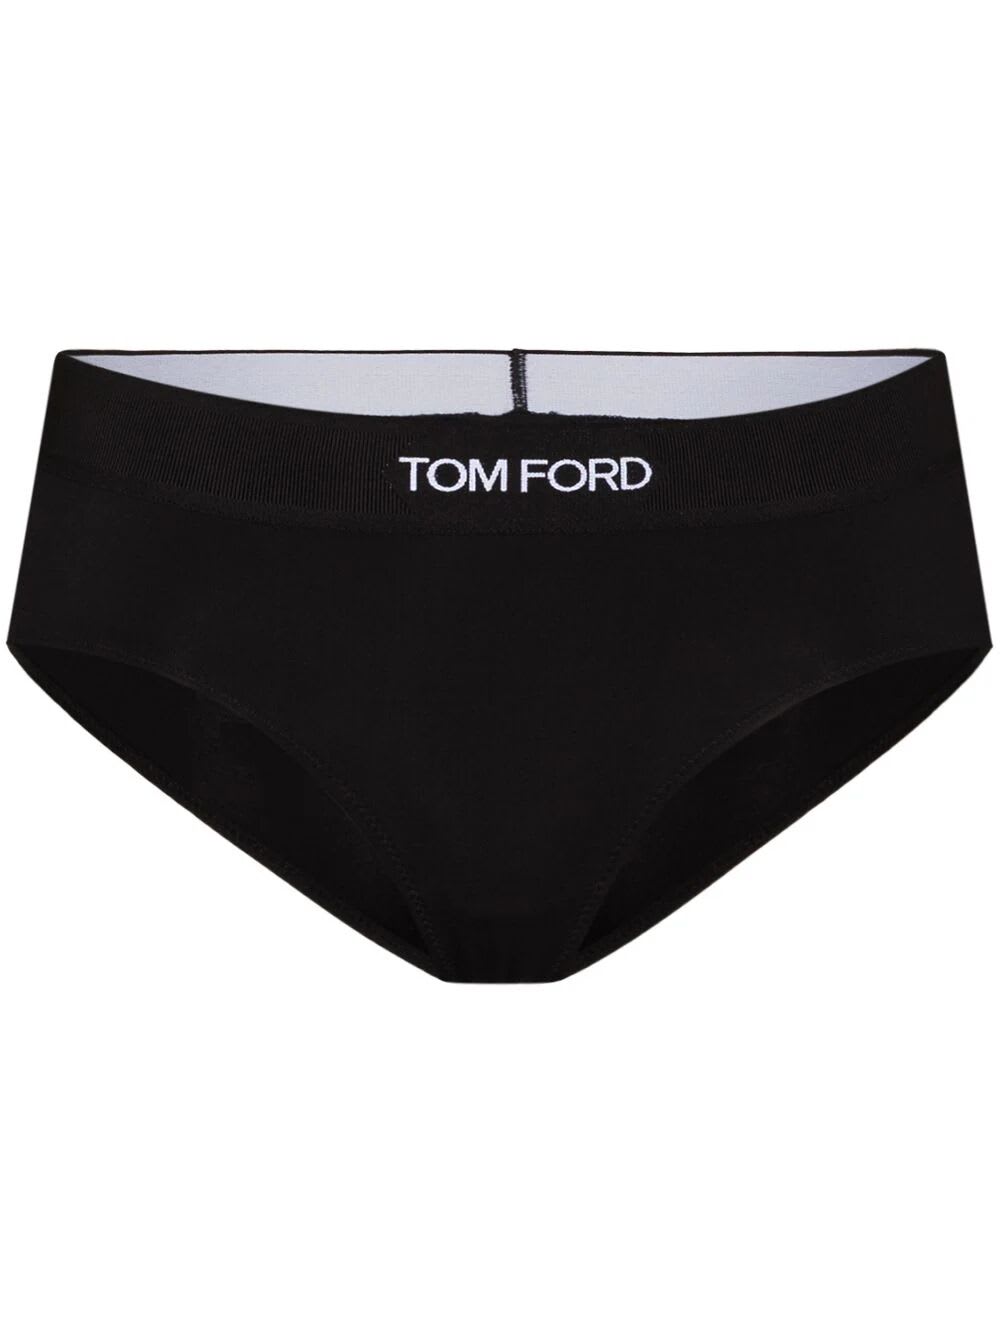 Tom Ford Modal Signature Boy Shorts In Black